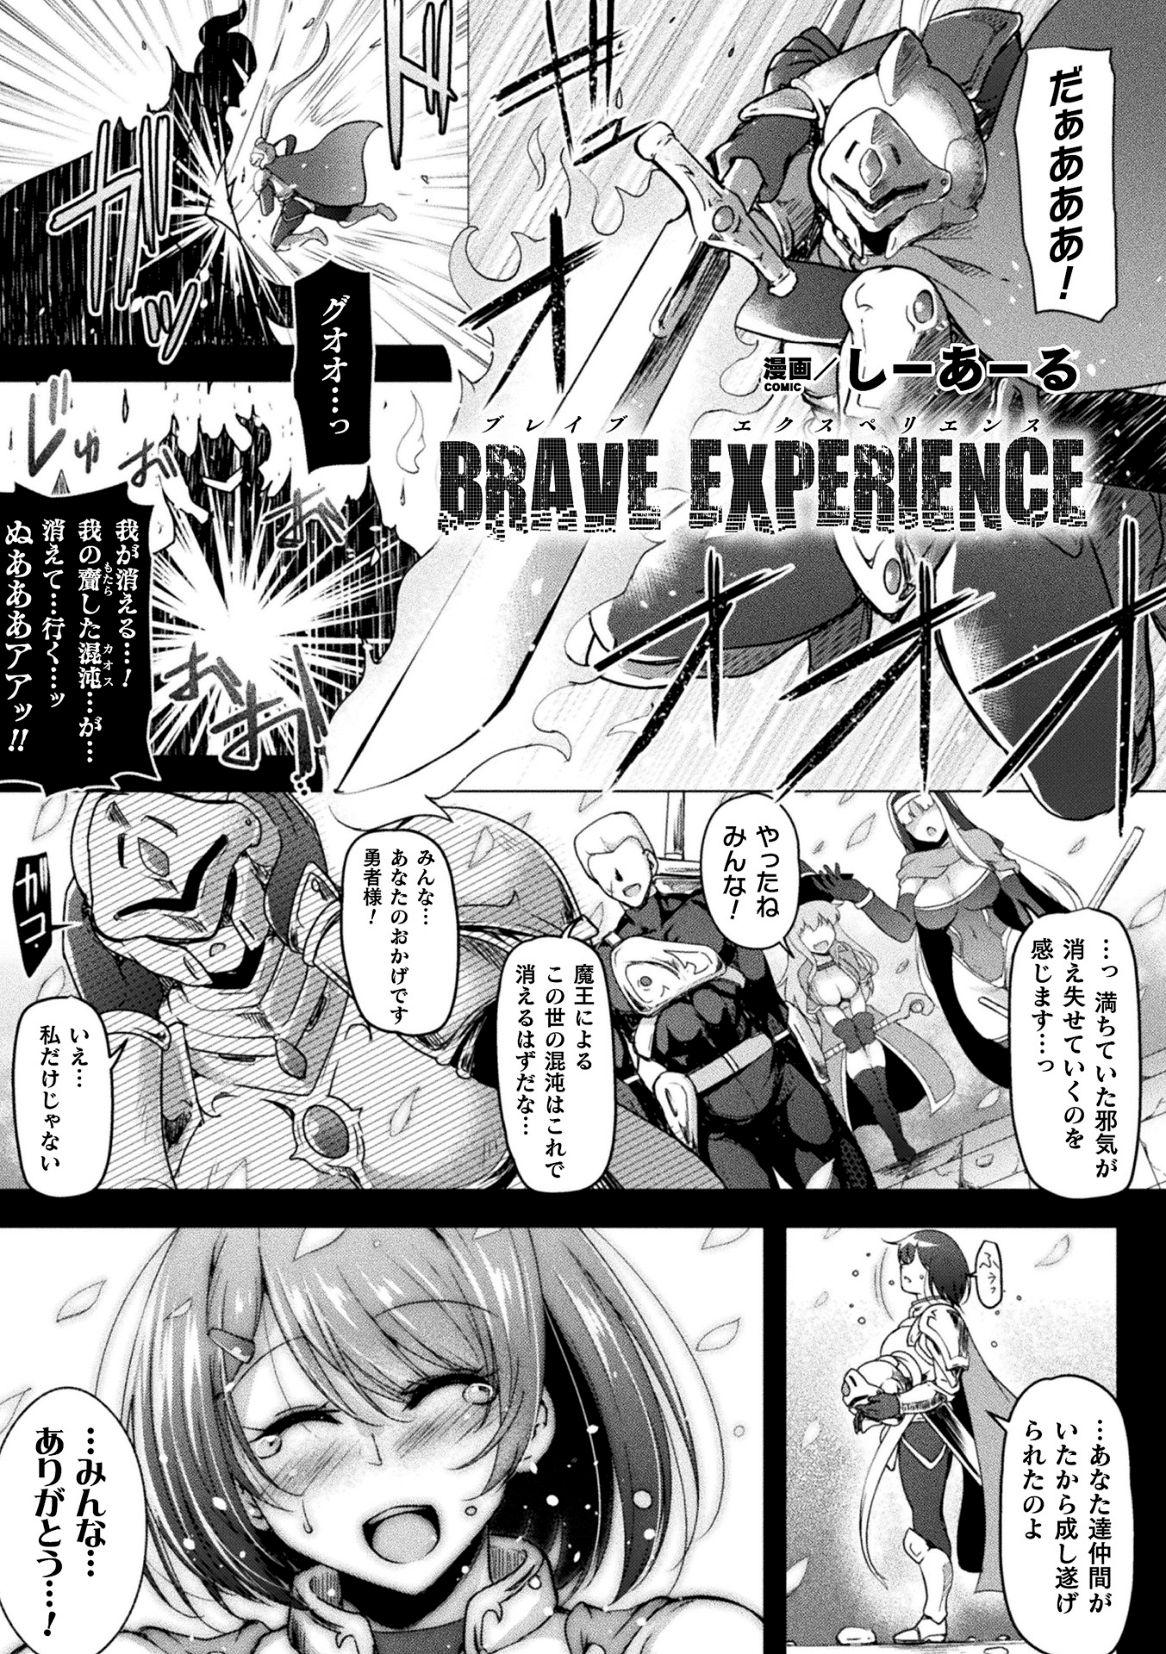 BRAVE EXPERIENCE 0